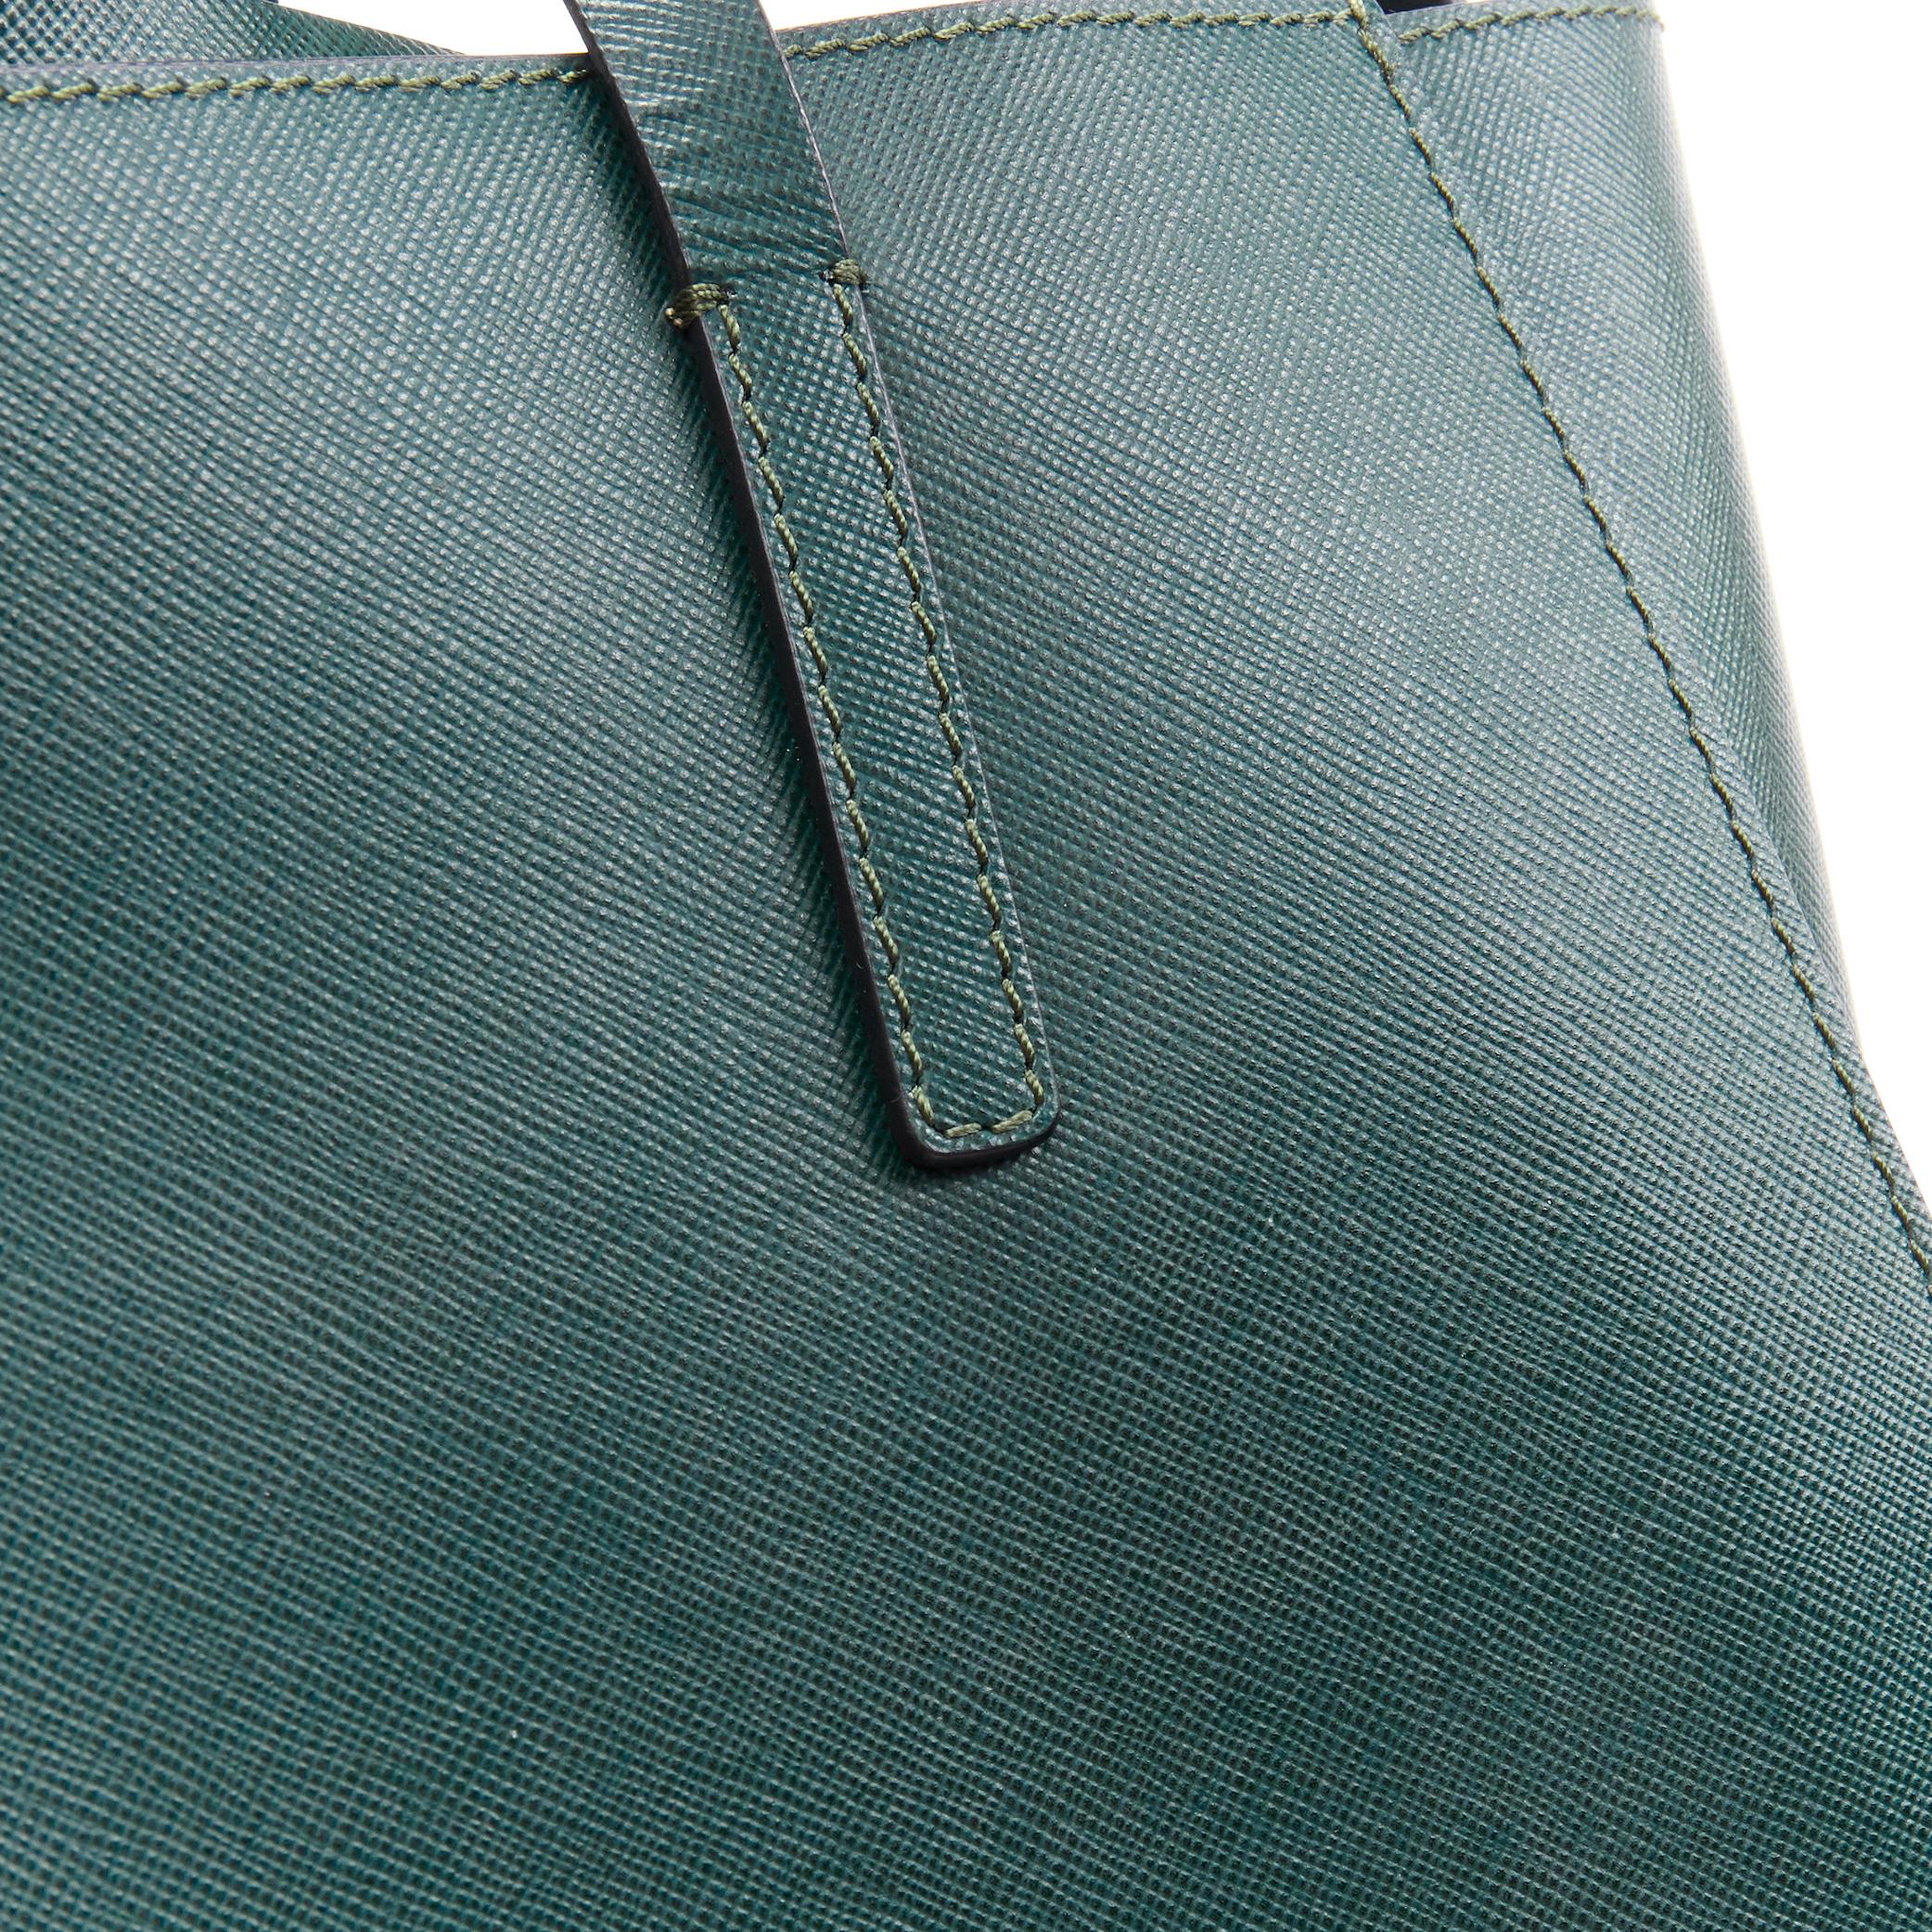 MARNI green saffiano leather top zip asymmetric structured tote bag 8